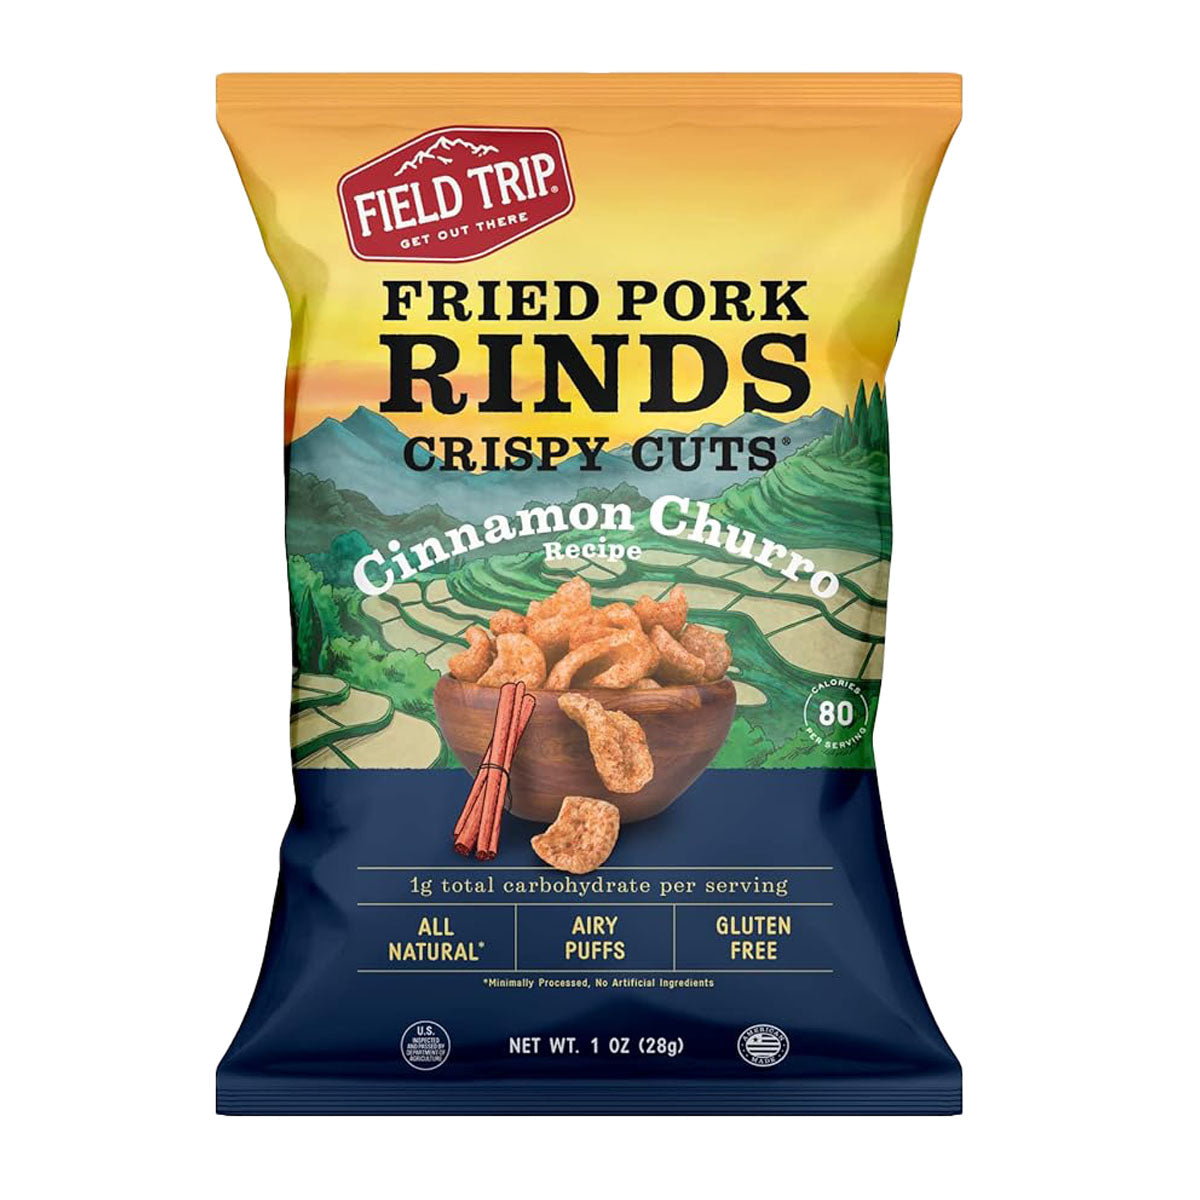 Crispy Cuts Cinnamon Churro Pork Rinds (1 oz)